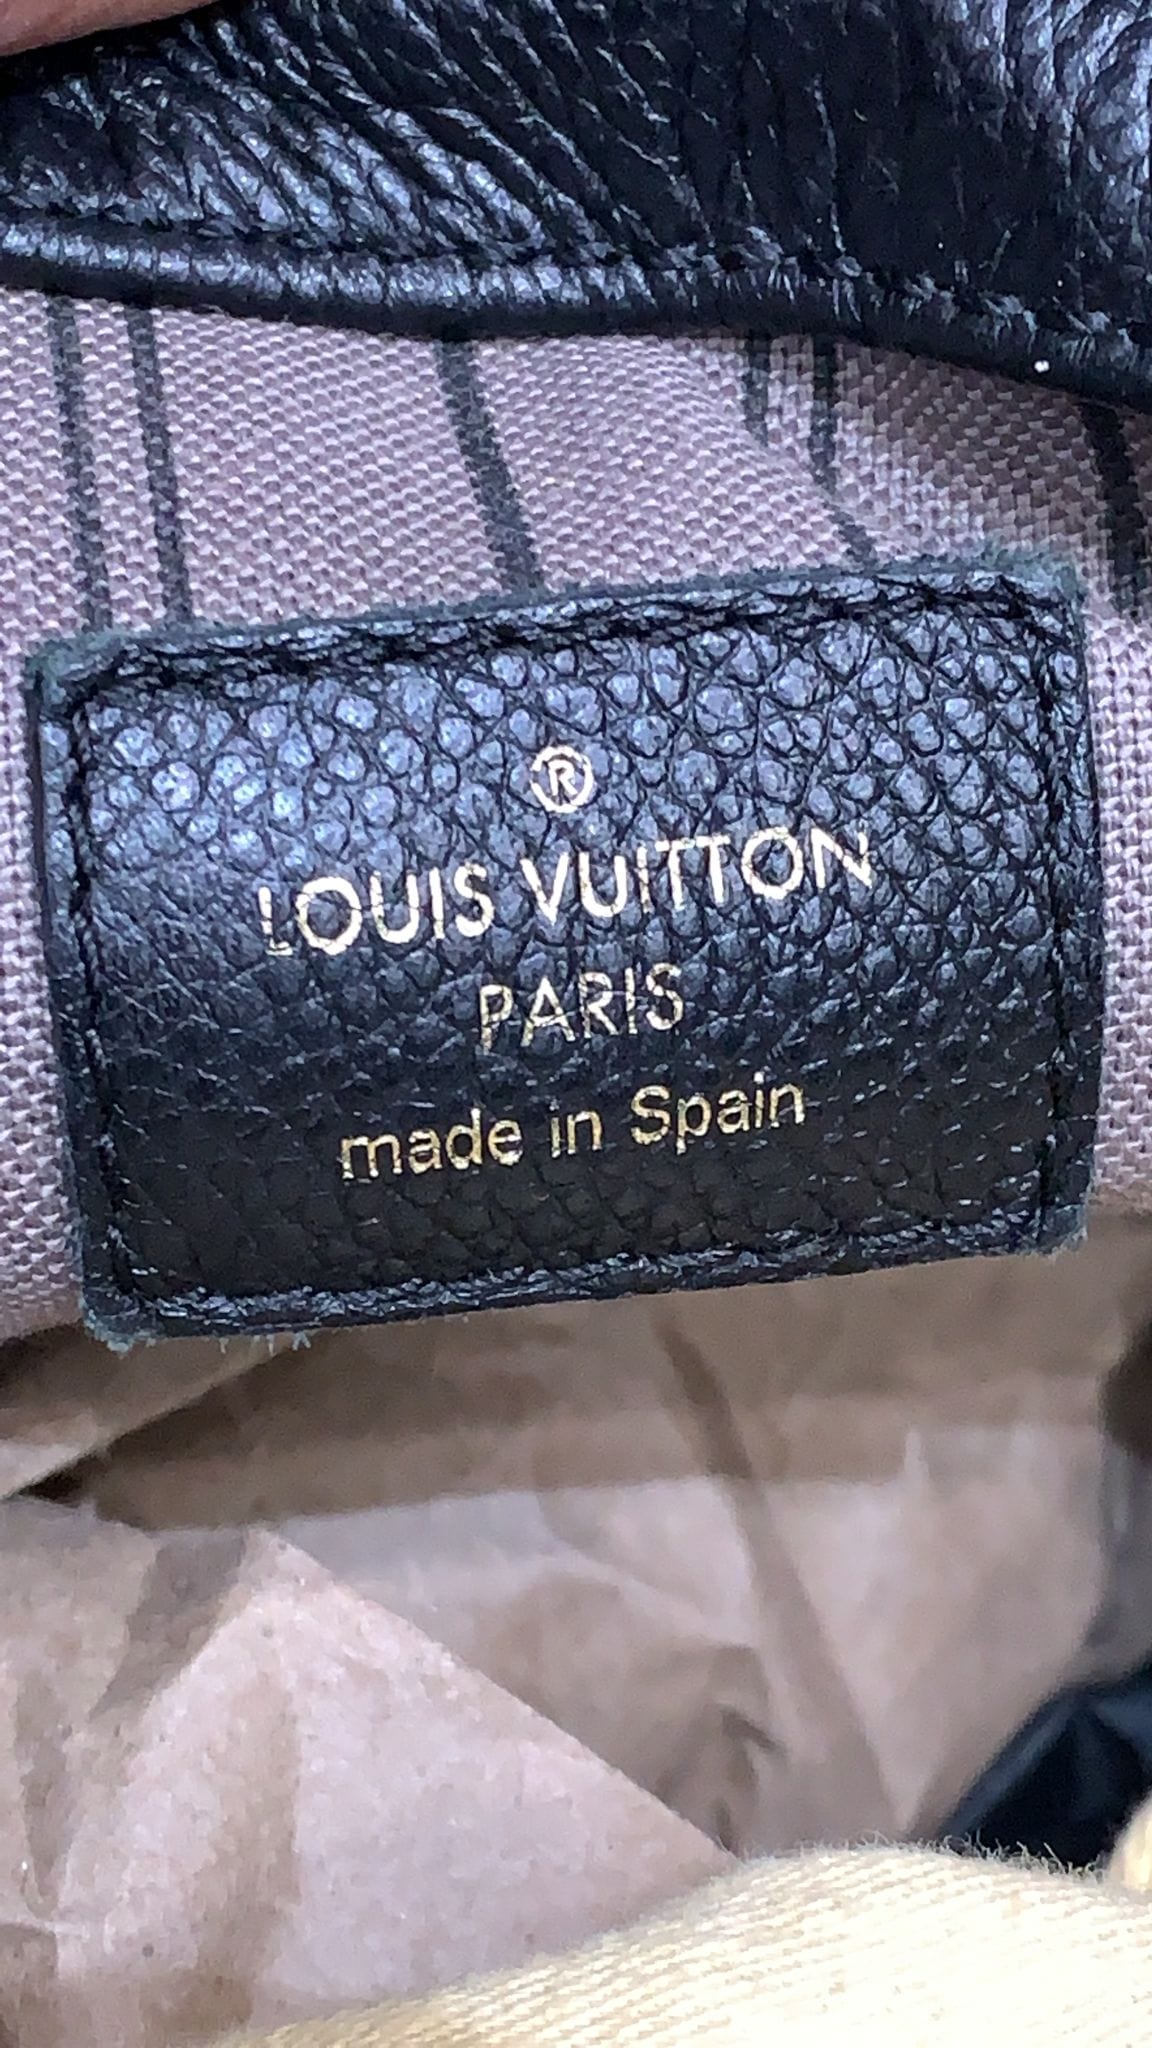 Authentic Louis Vuitton Artsy In Empreinte Leather